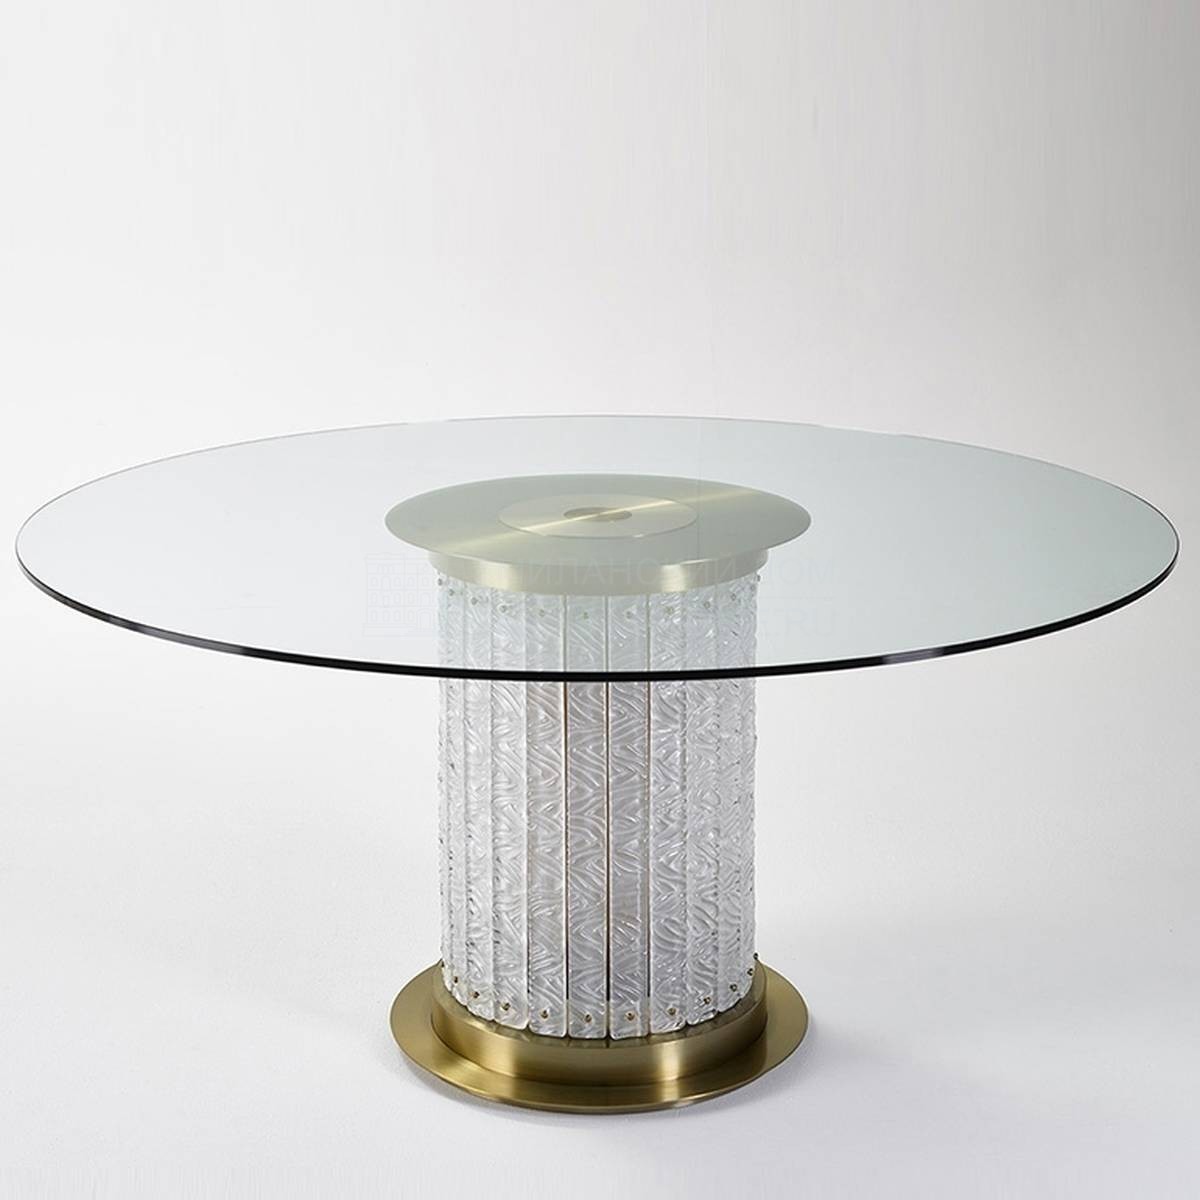 Круглый стол Howard round table из Италии фабрики MARIONI